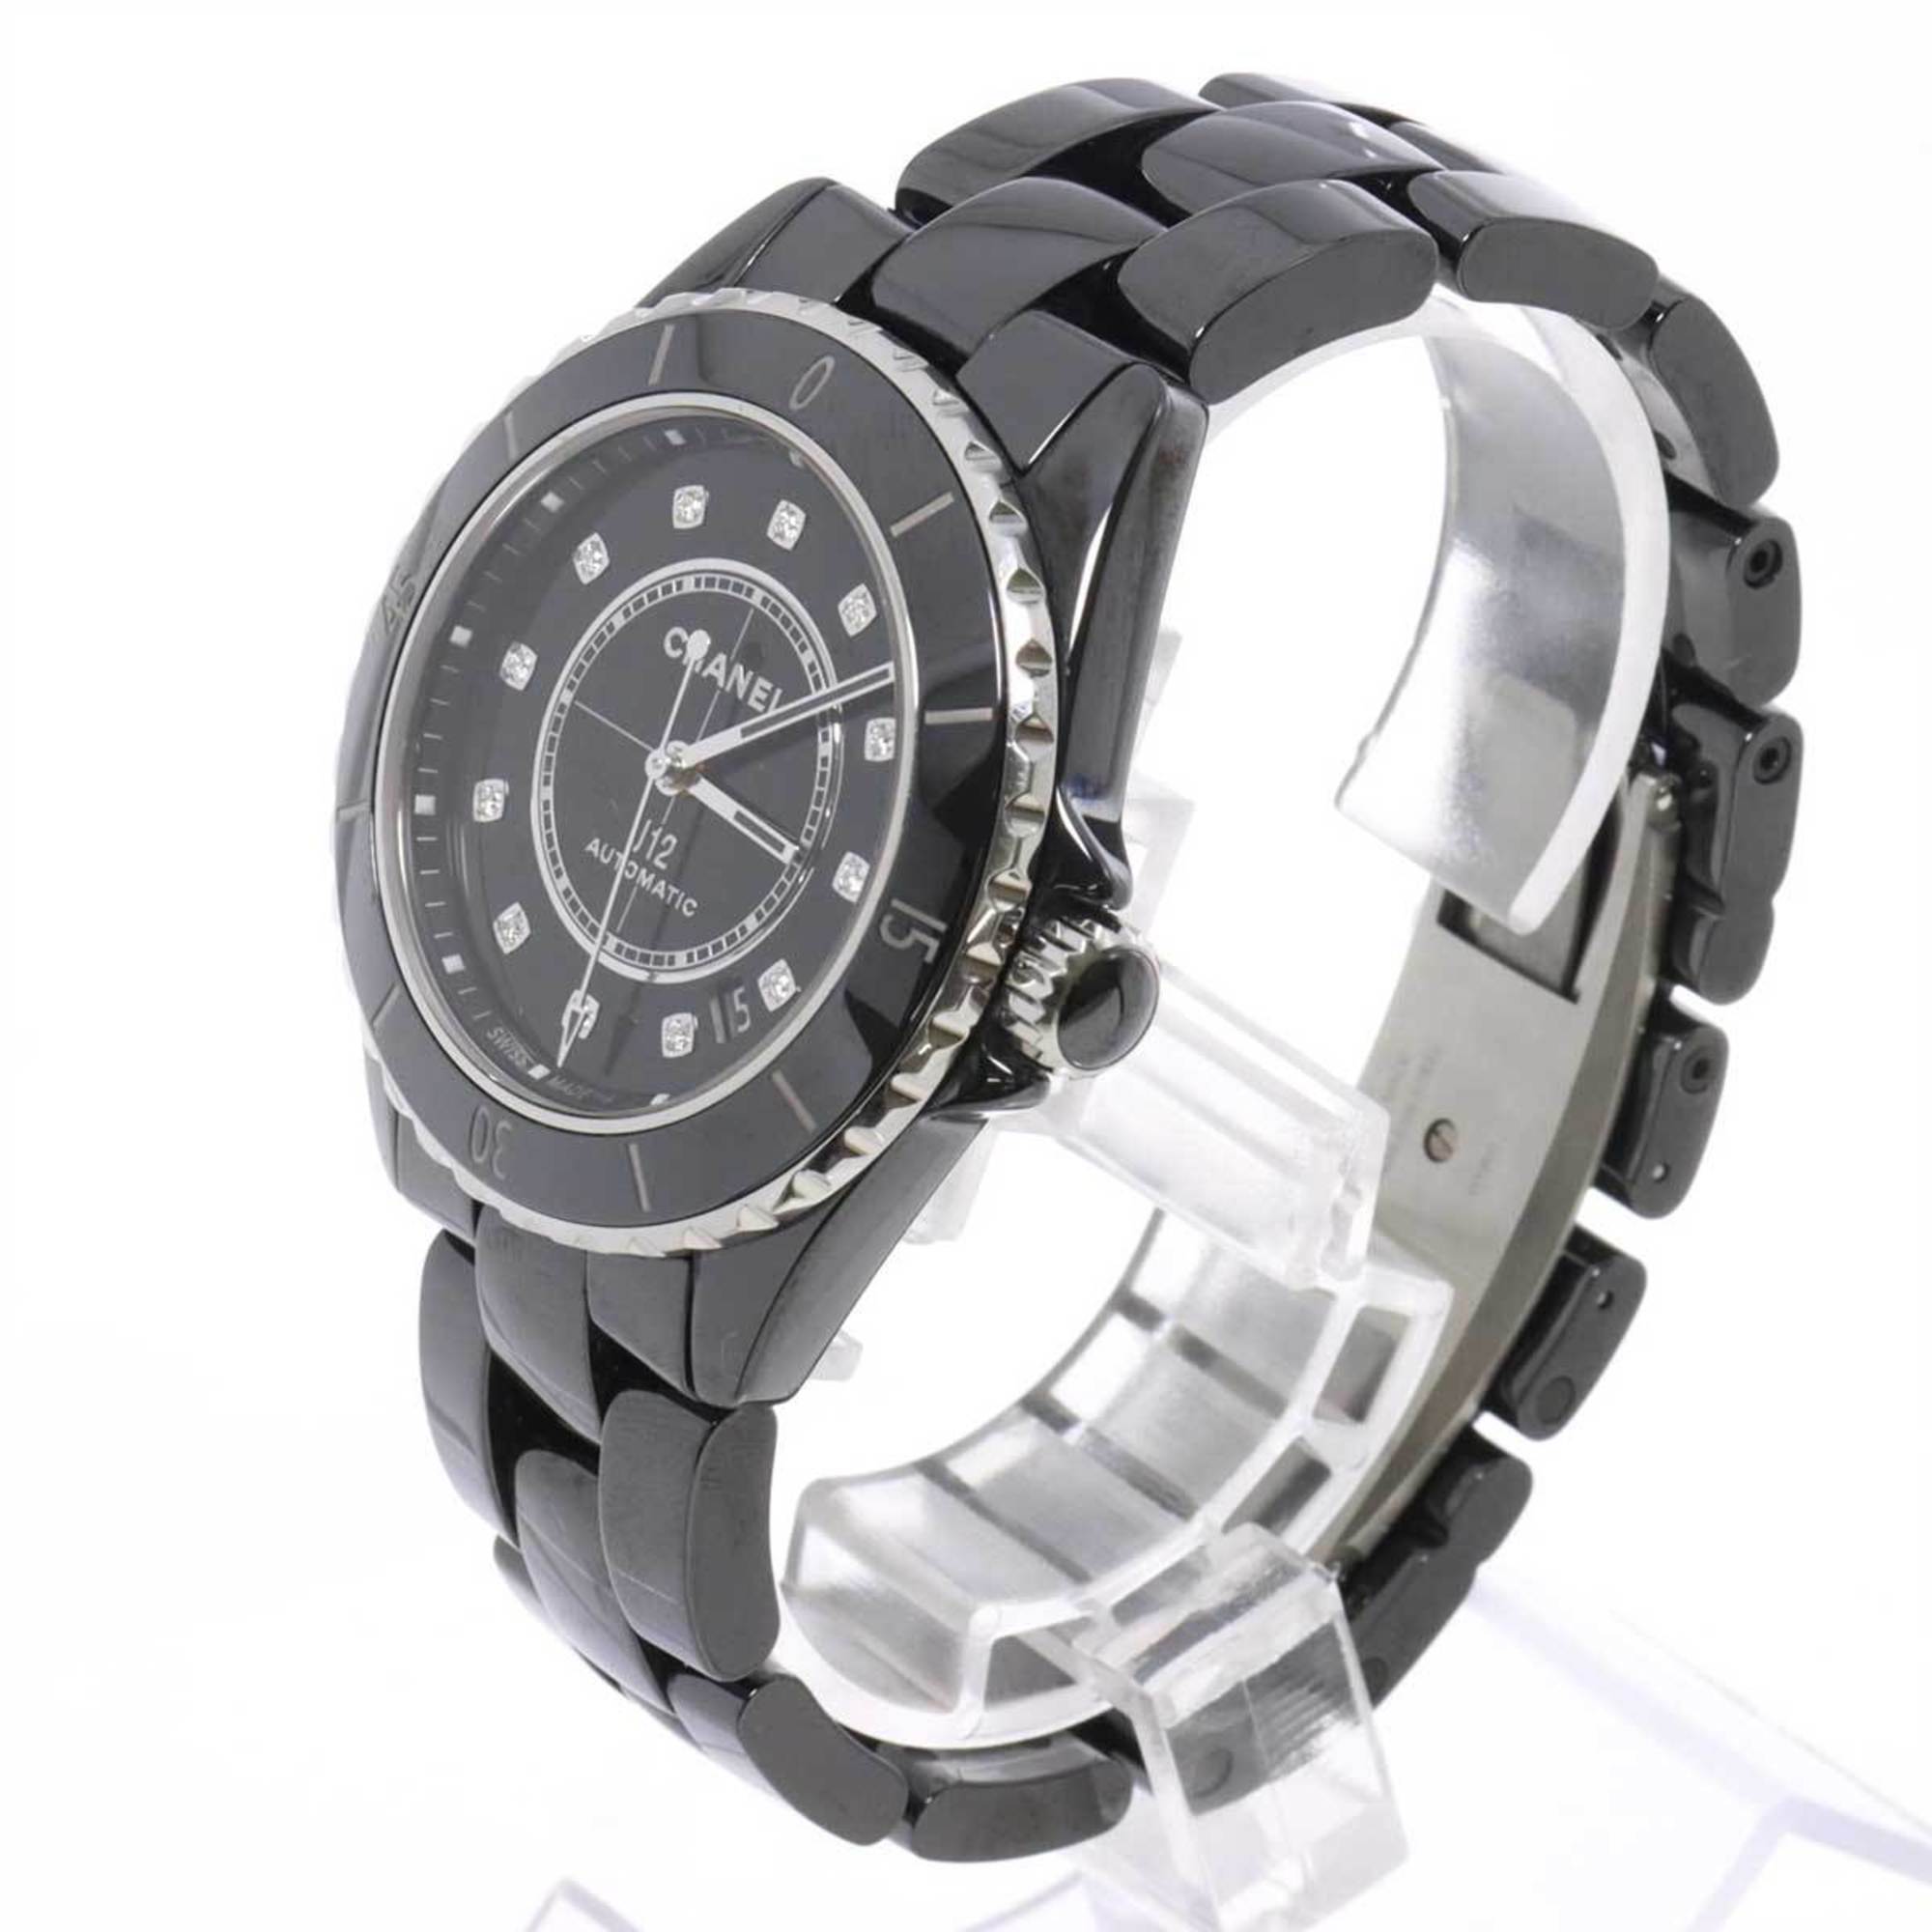 Chanel CHANEL J12 38mm H5702 Men's Watch 12P Diamond Black Ceramic Date Automatic Self-Winding